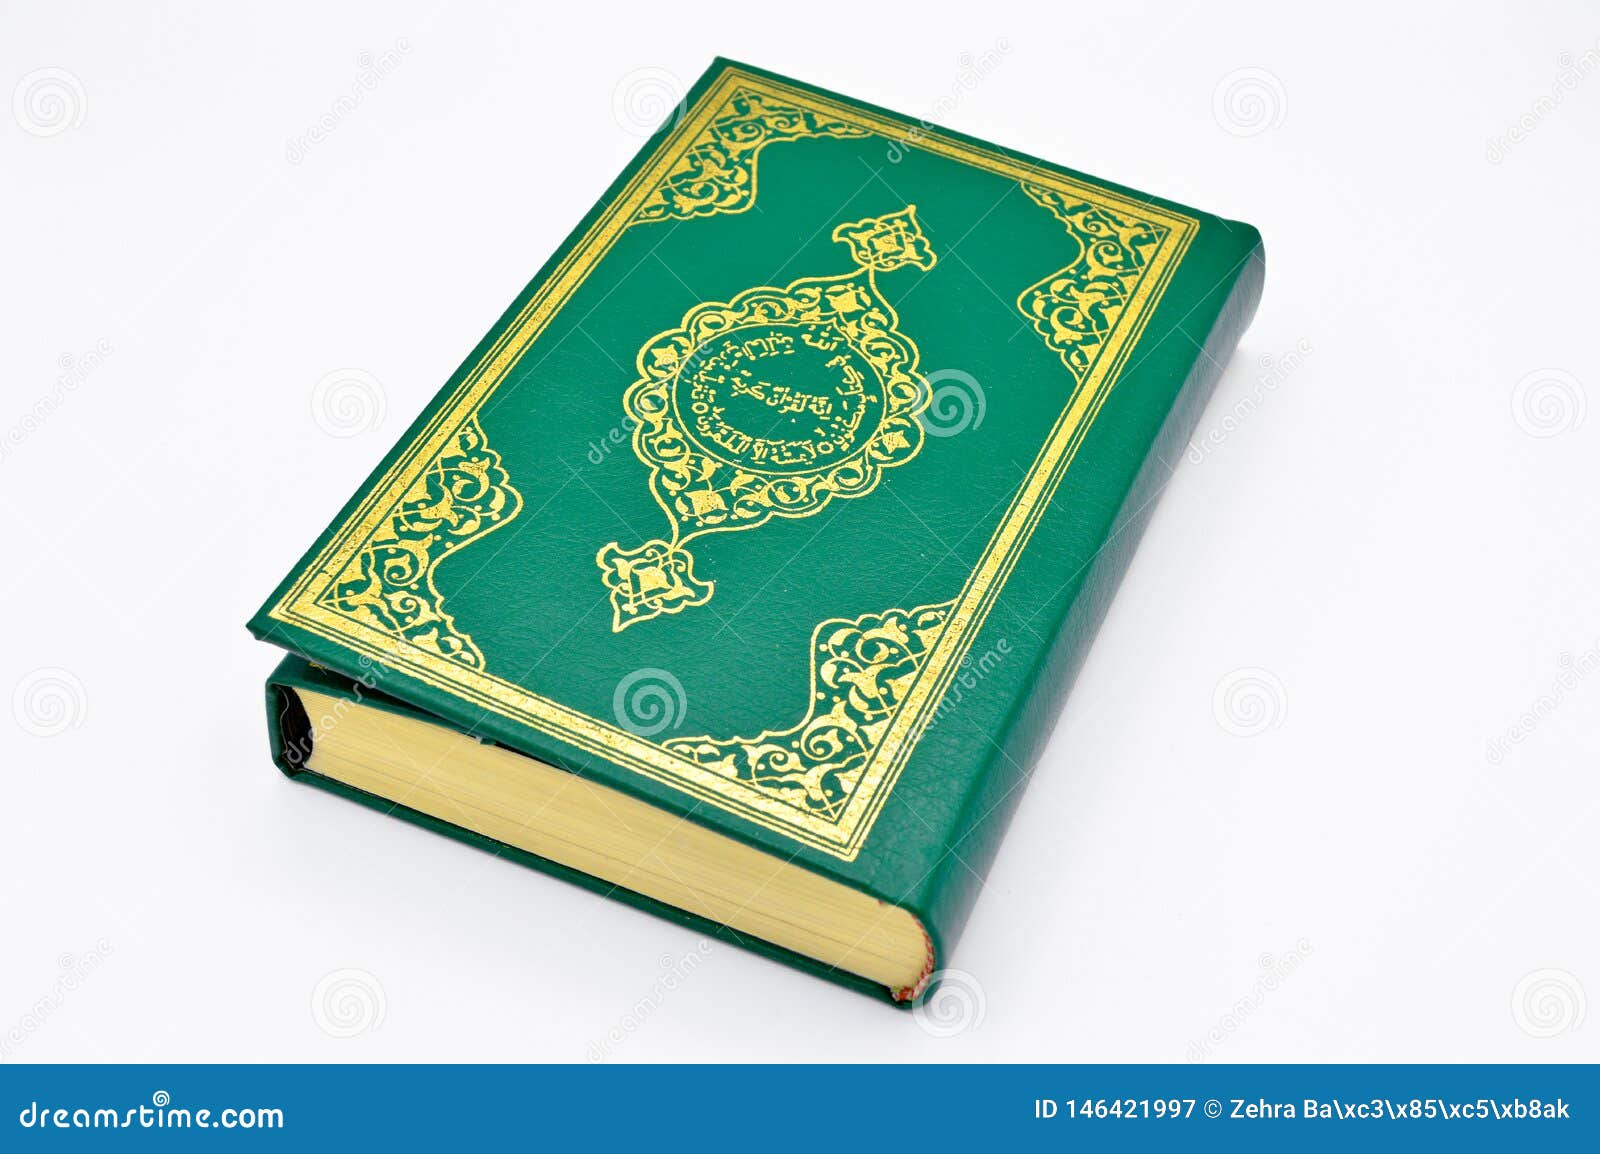 Книга мусульман 5. Коран (зеленый). Зеленая книжка для мусульман. Коран салатовый. Коран зеленая книга.